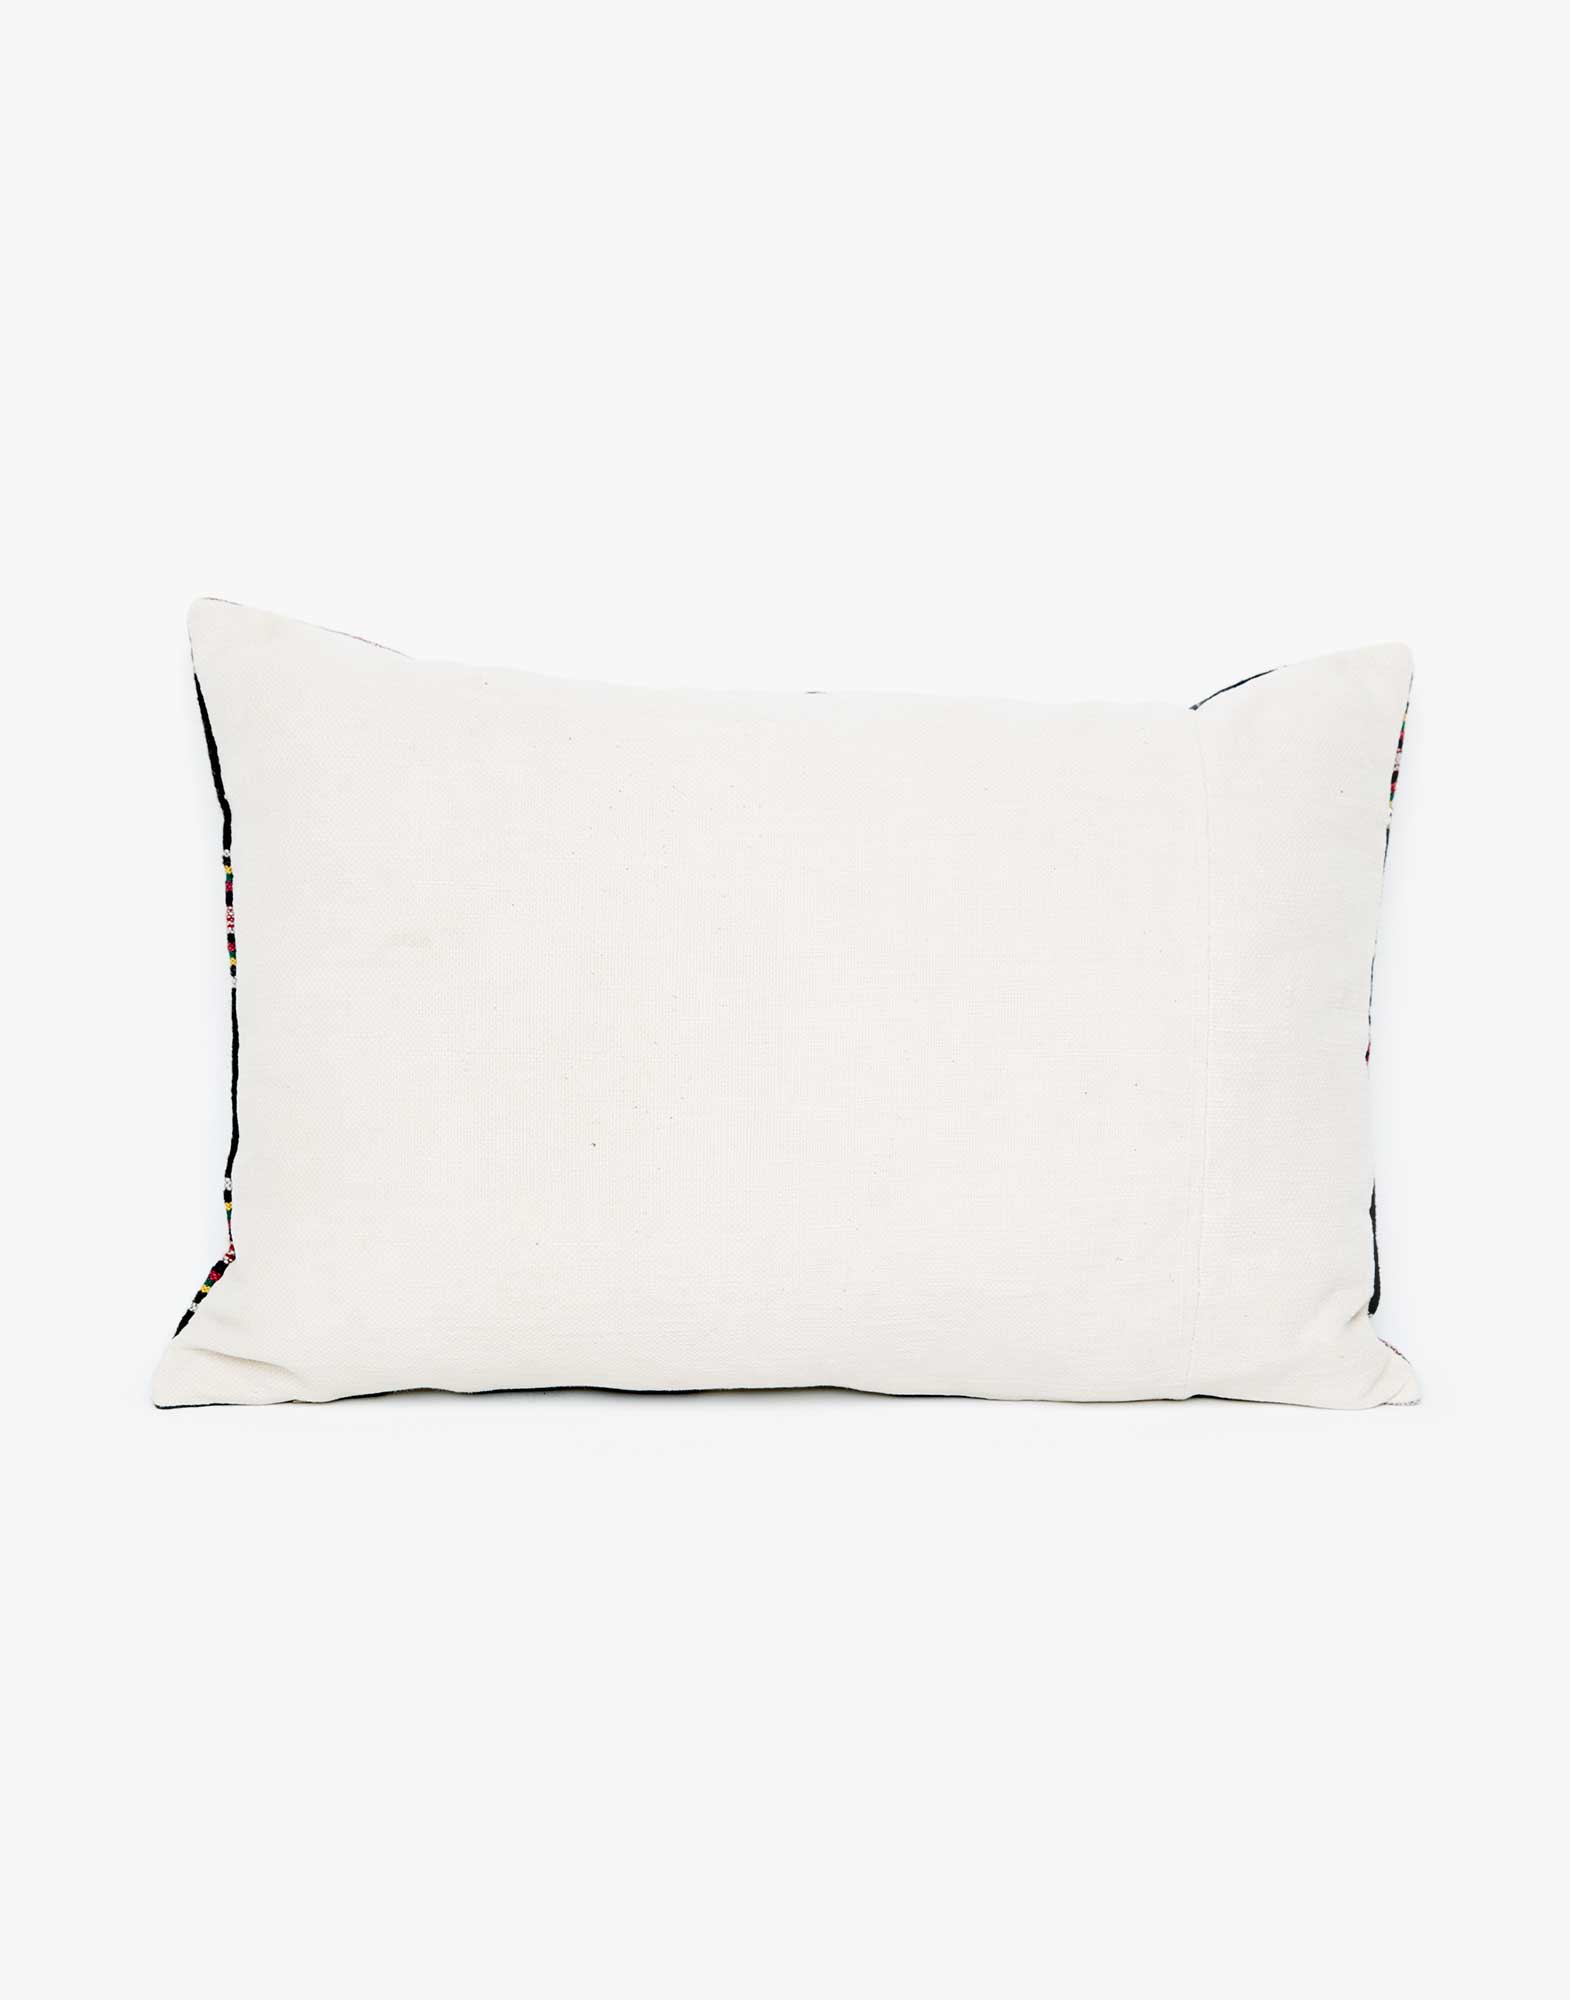 Handwoven Vintage Kilim and Ikat Patchwork Pillow